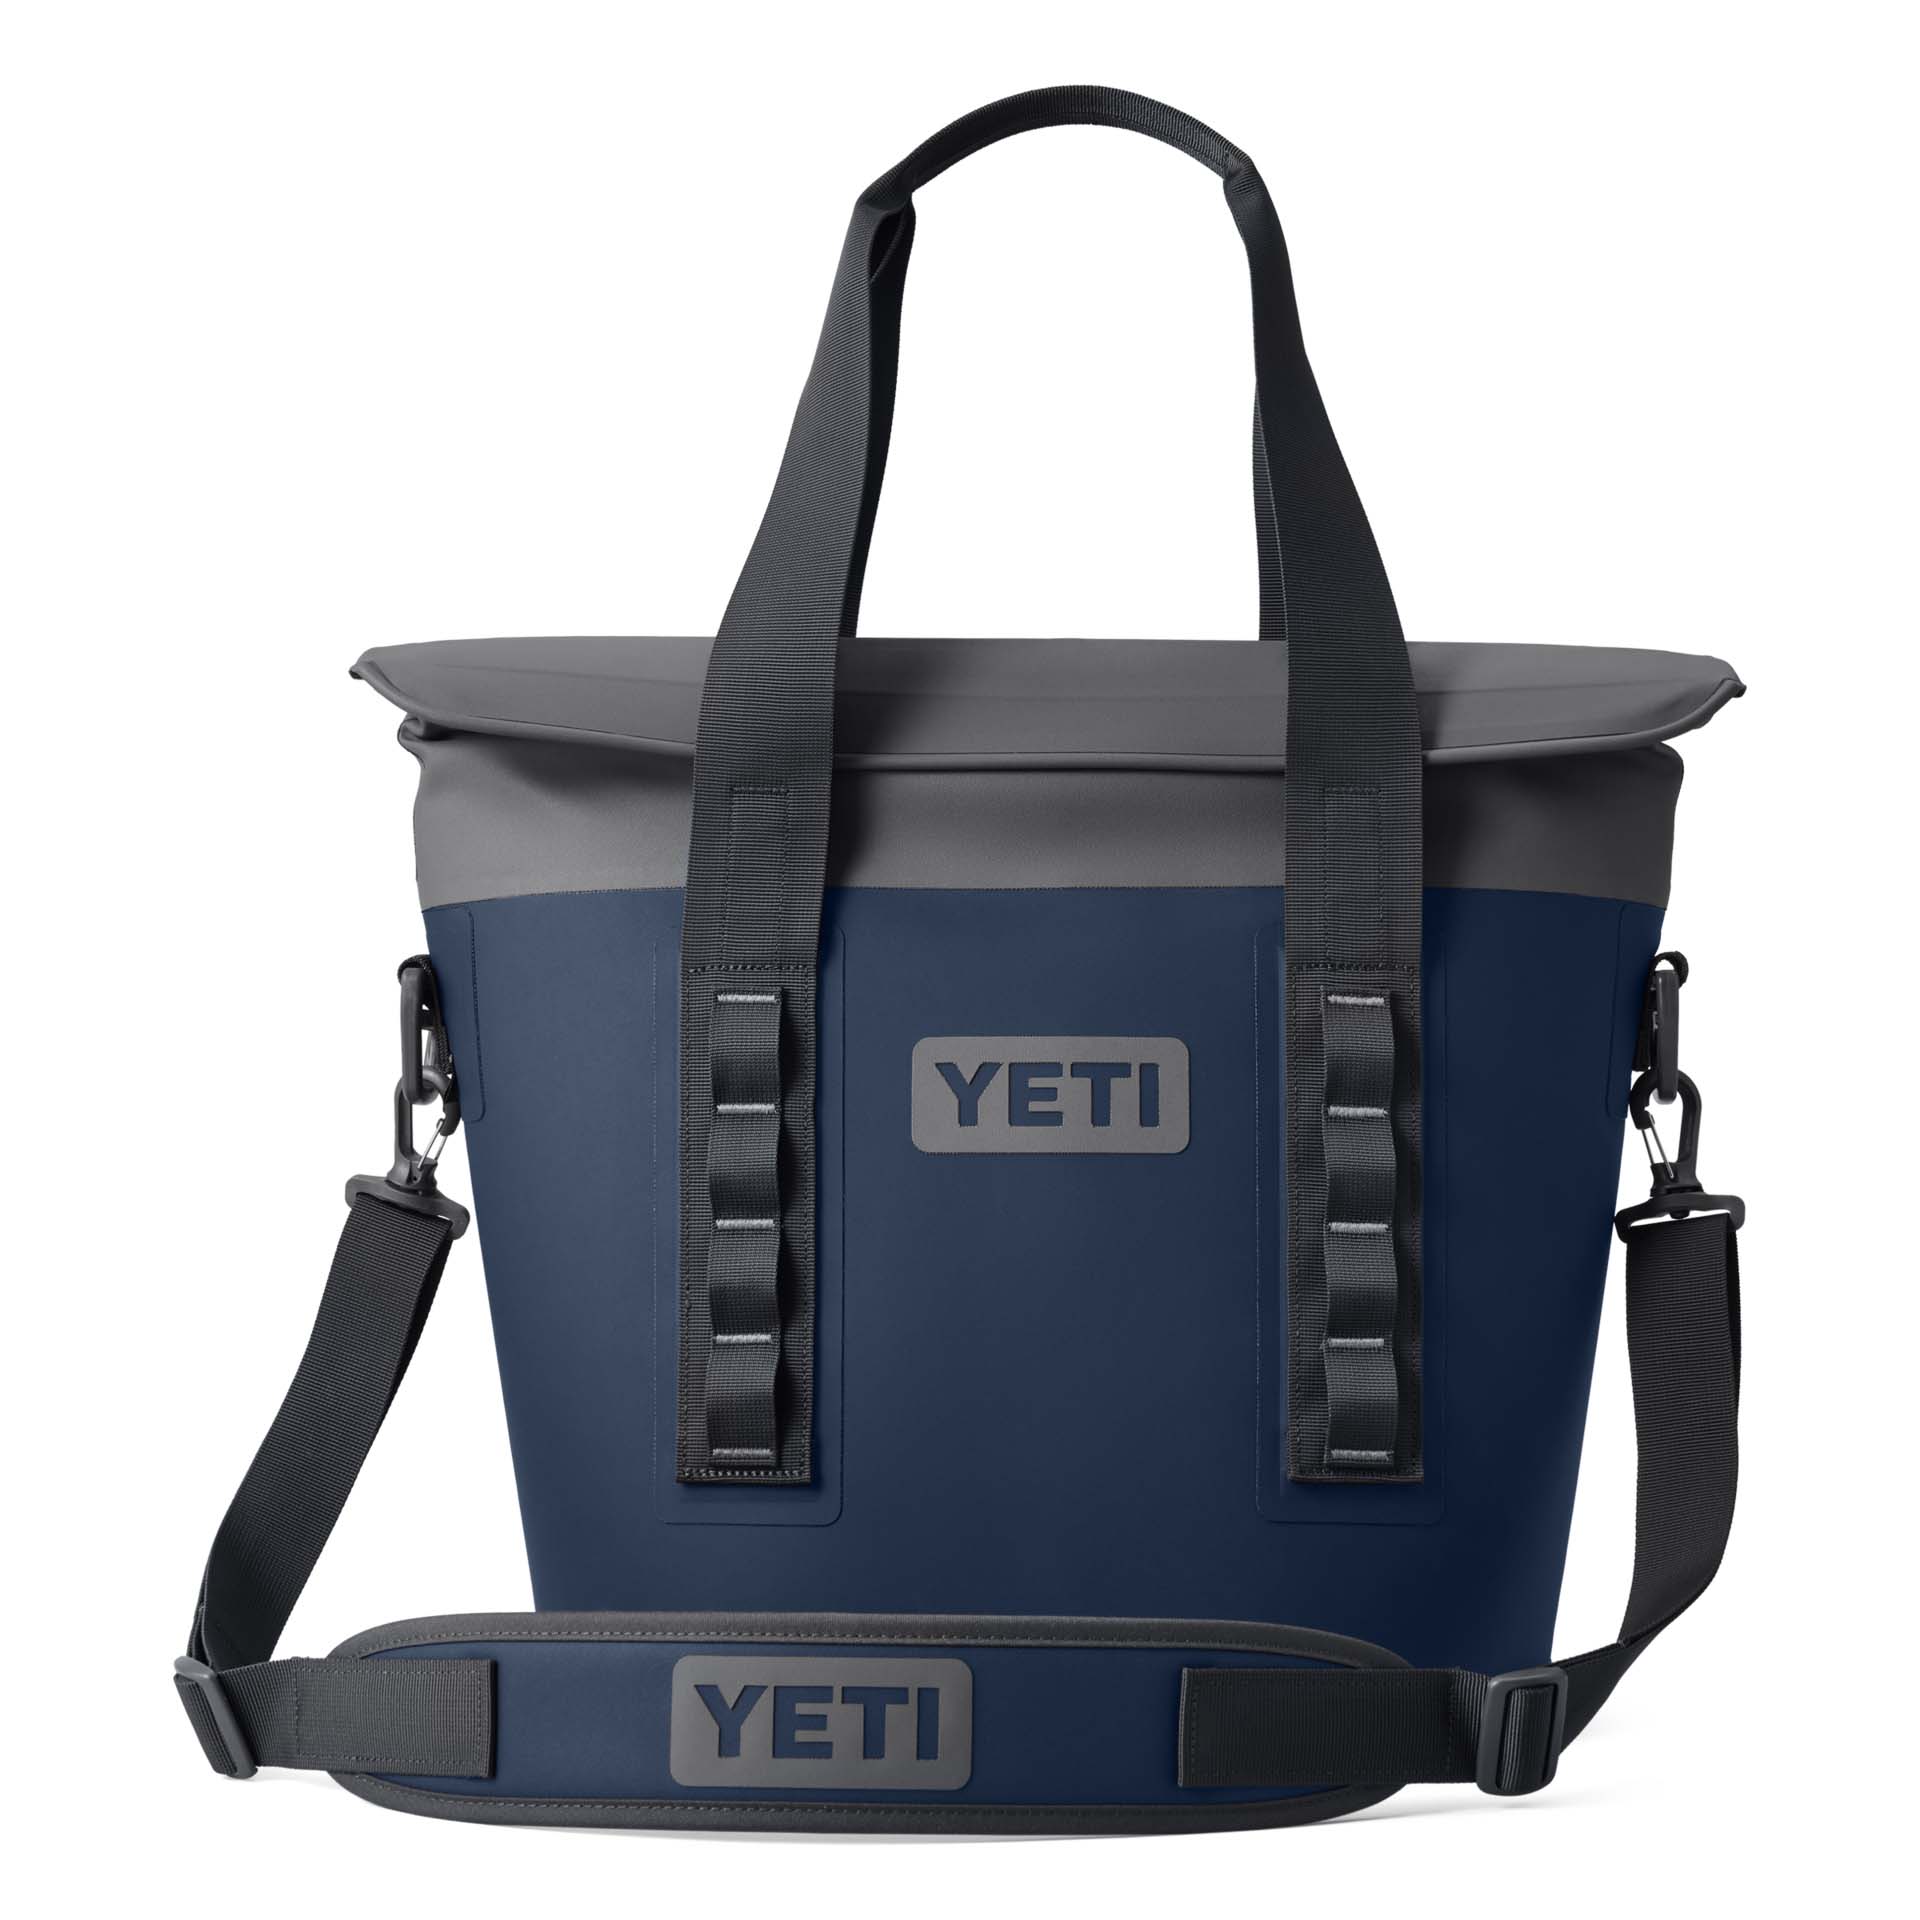 YETI Hopper M20 2.0 Soft Backpack Cooler